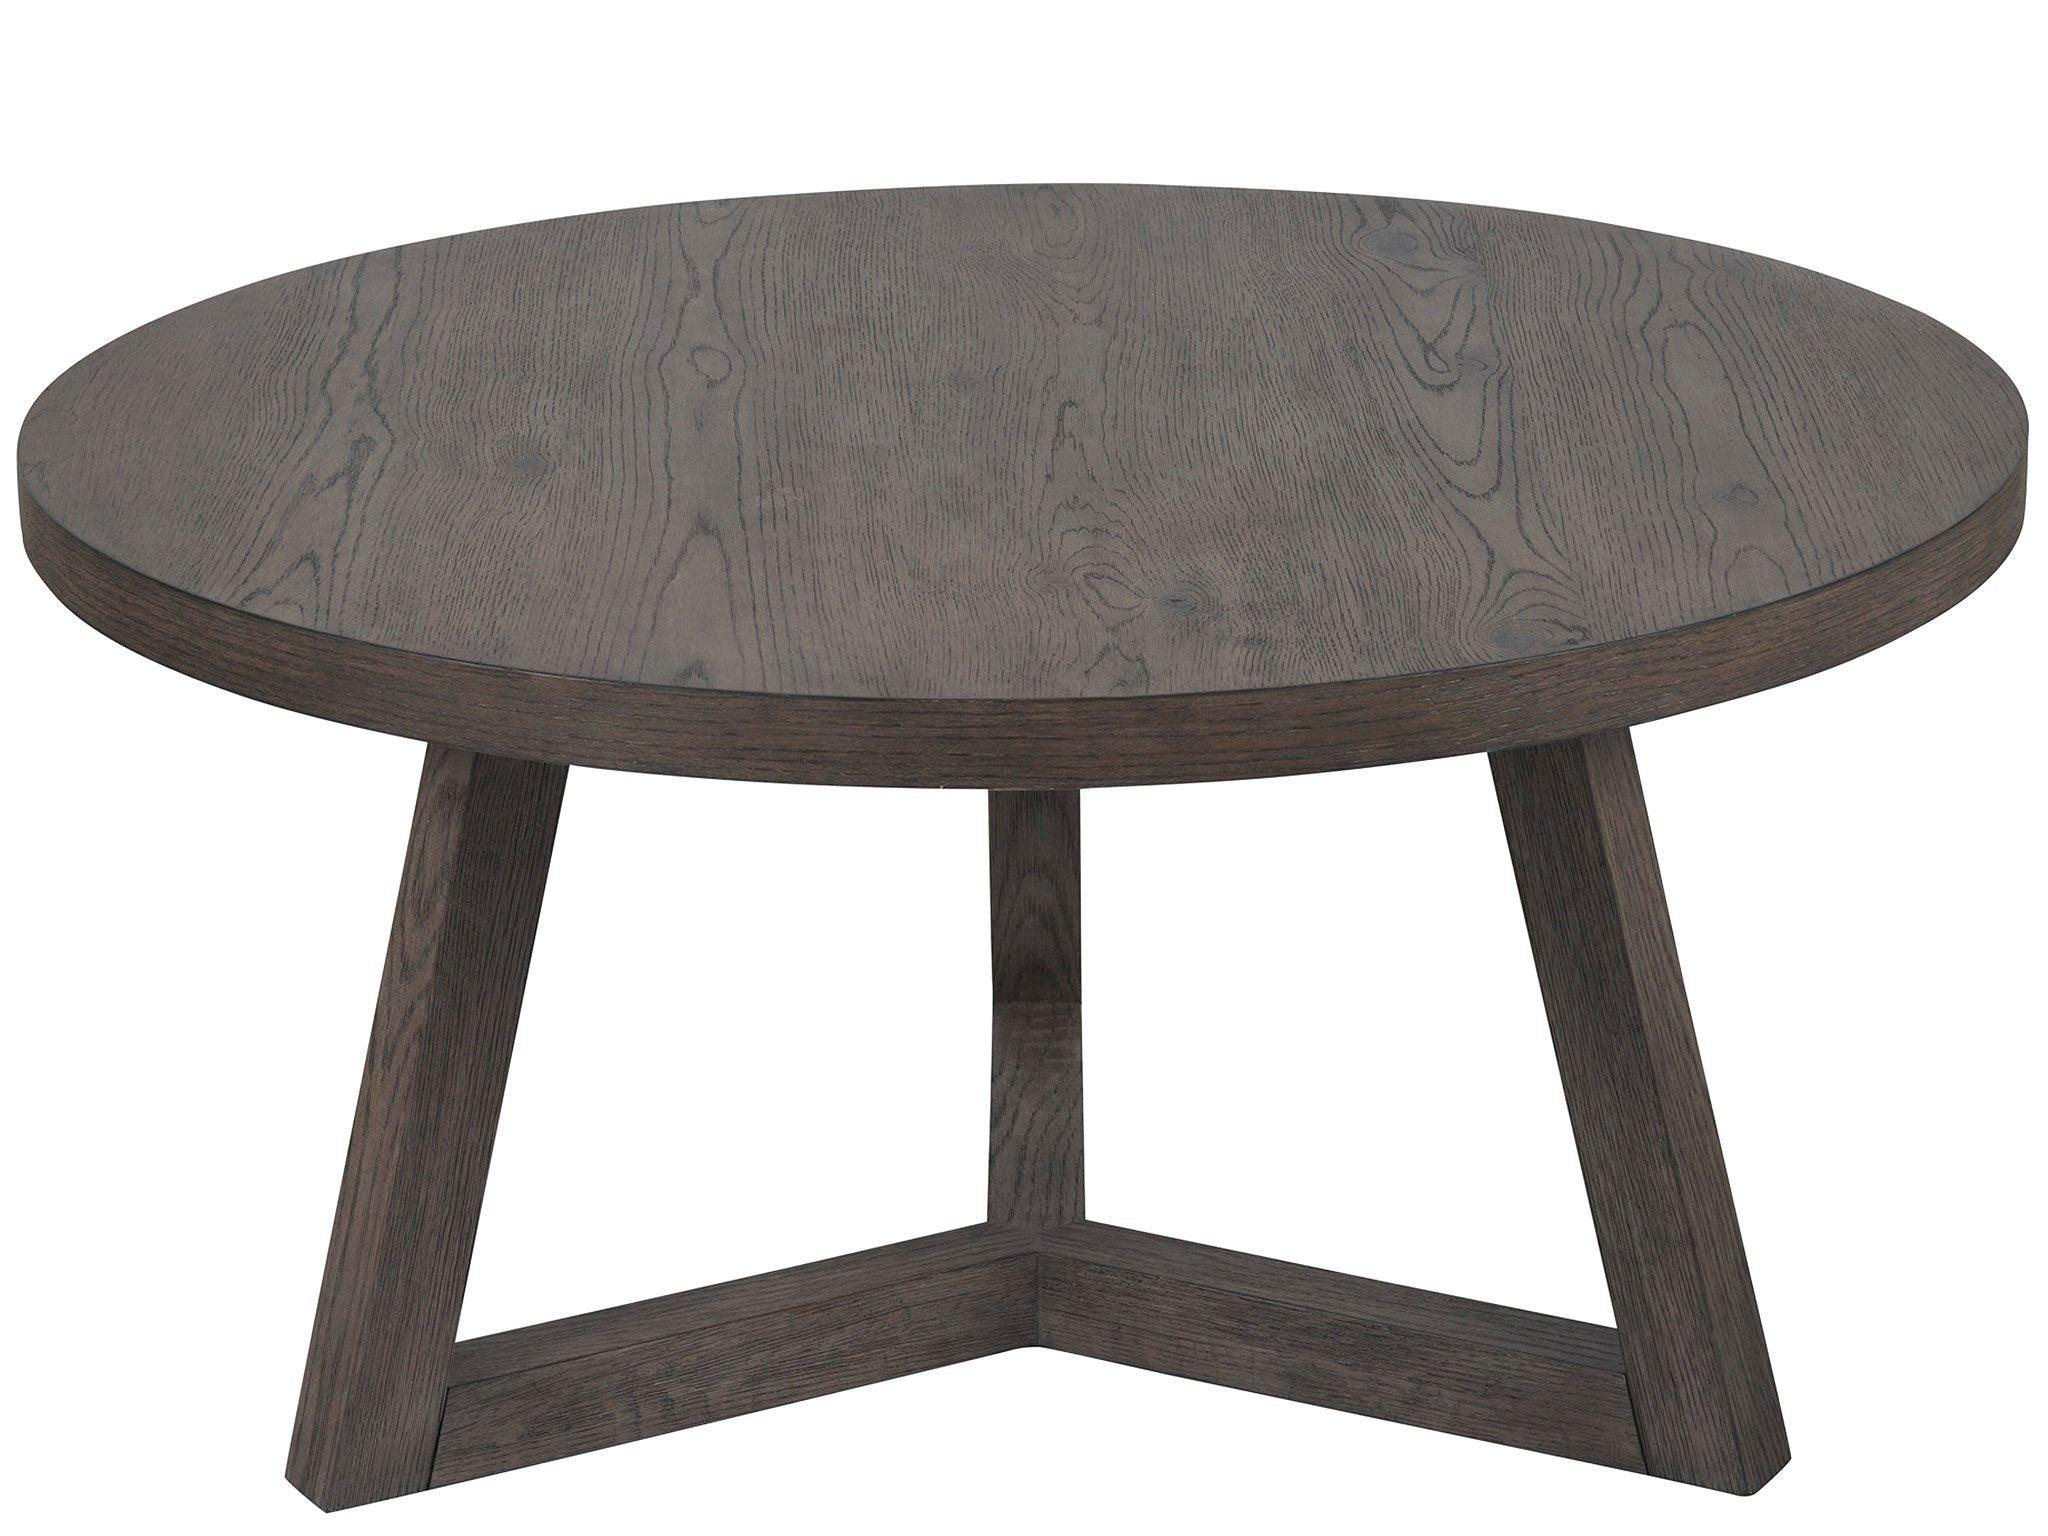 Universal Furniture - New Modern - Muse Bunching Table Large - Dark Brown - 5th Avenue Furniture